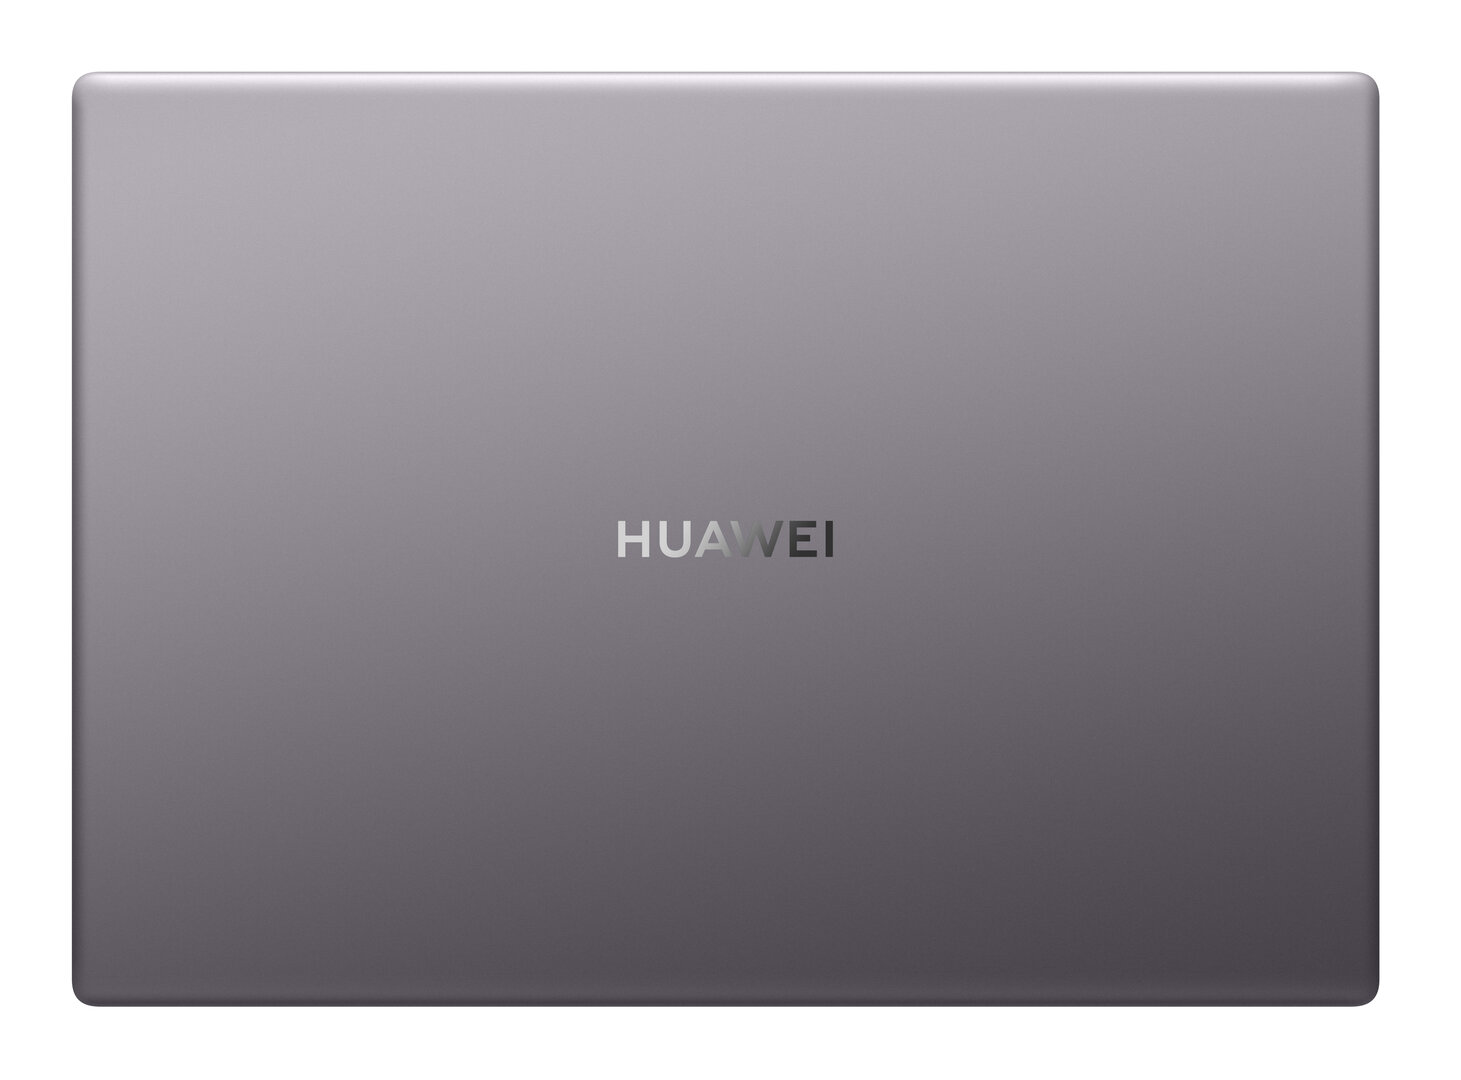 Huawei MateBook X Pro